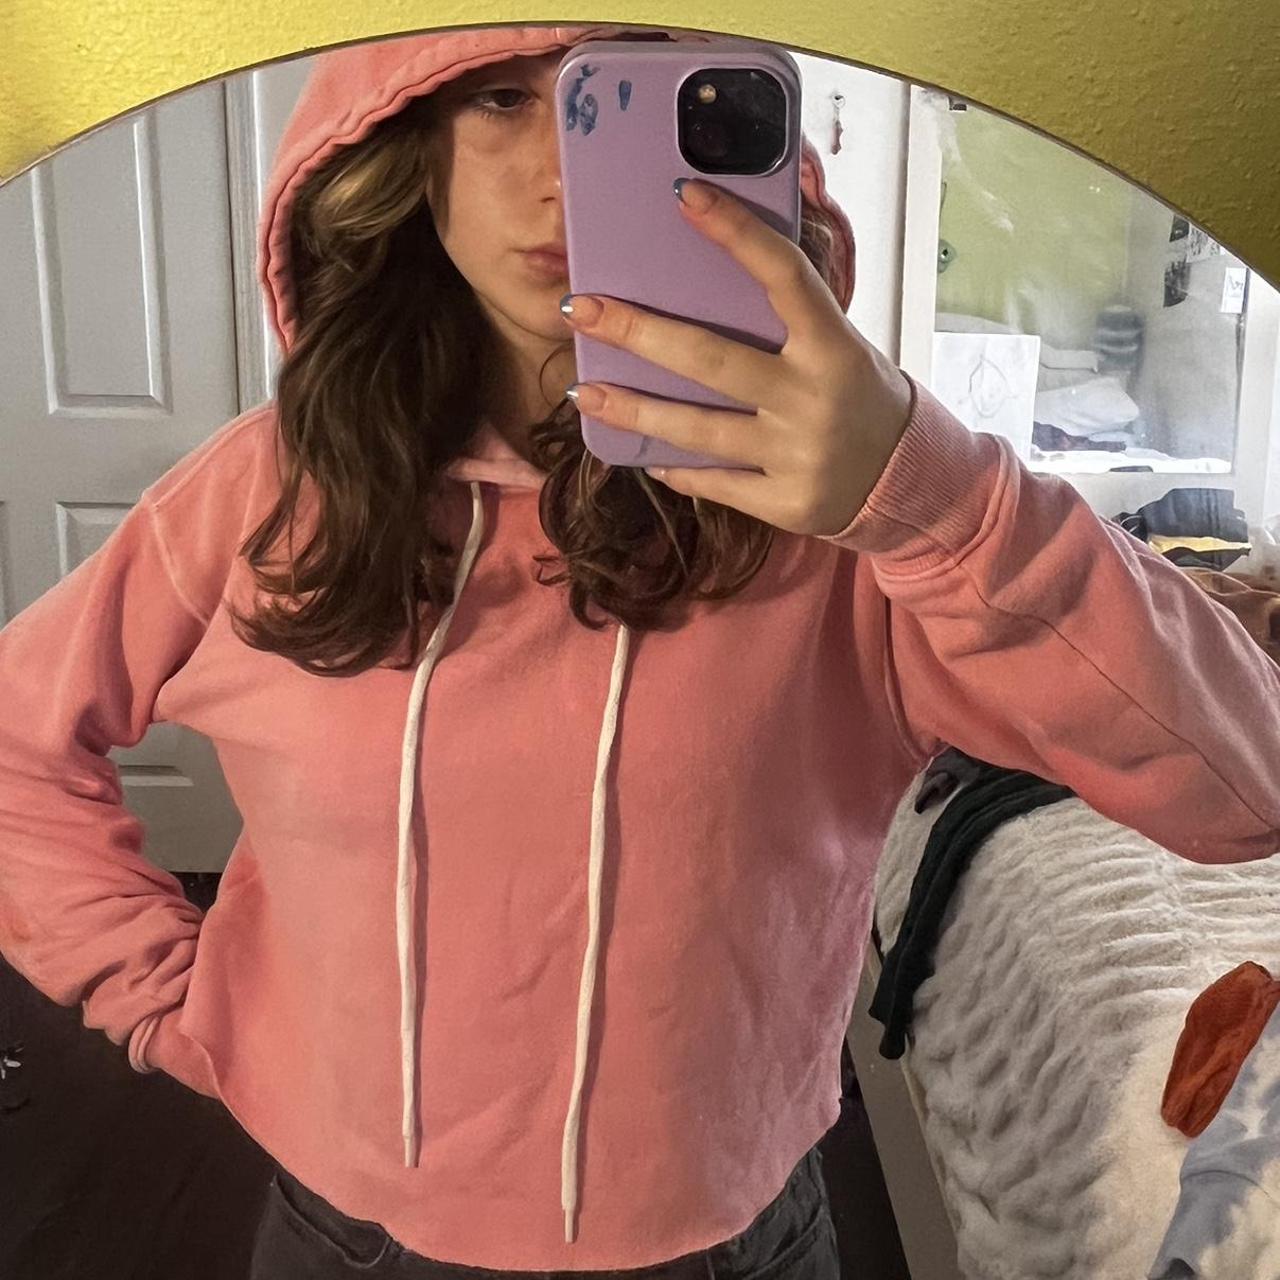 Women's Cropped Sweatshirt - Wild Fable, Pink Medium